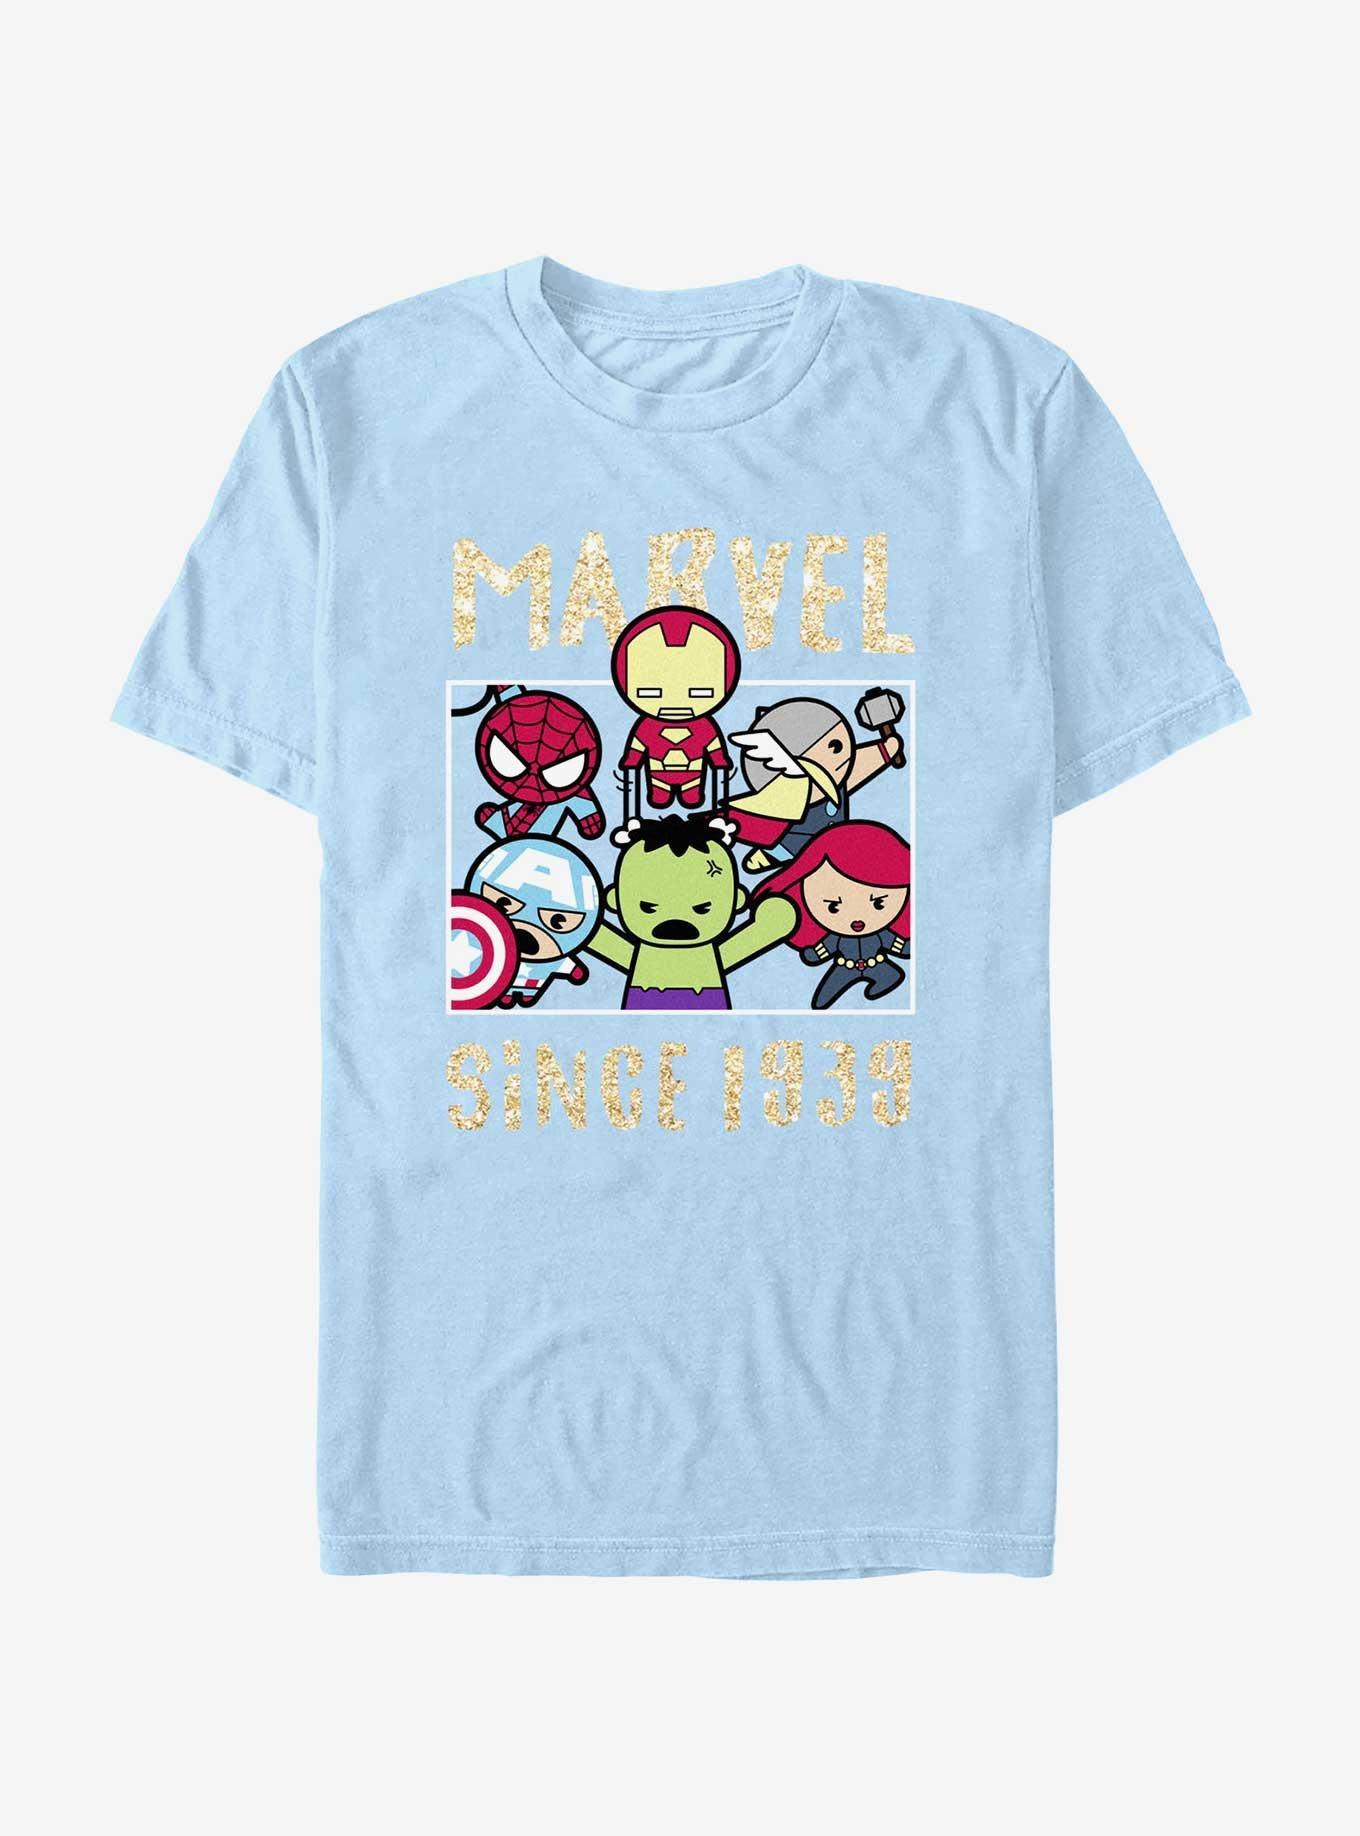 Marvel Avengers Chibi T-Shirt